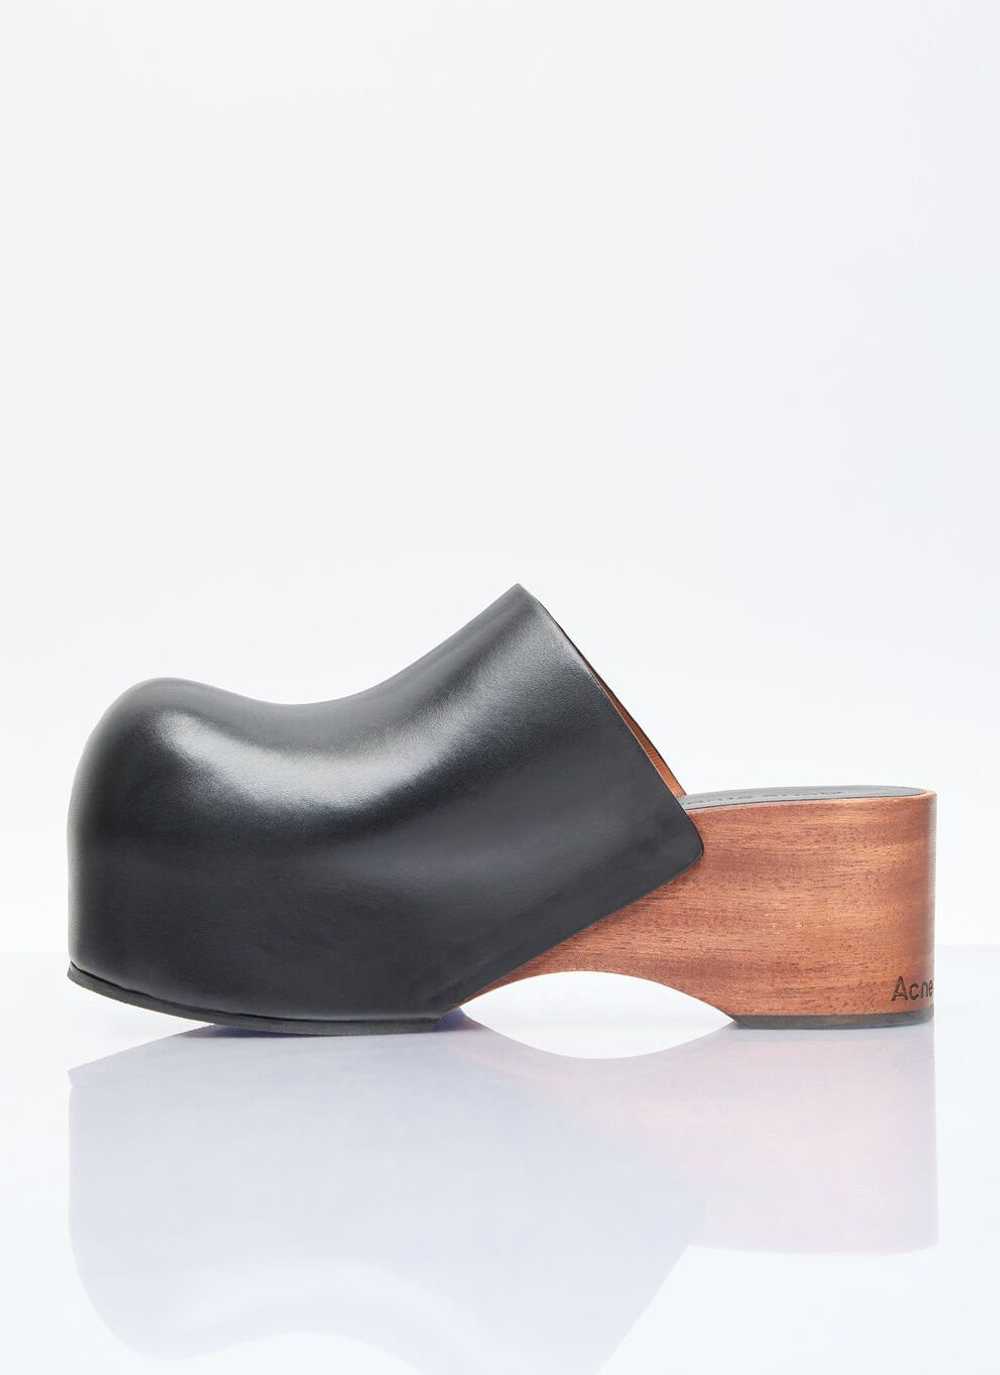 Acne Studios Leather Wood Clogs - image 4